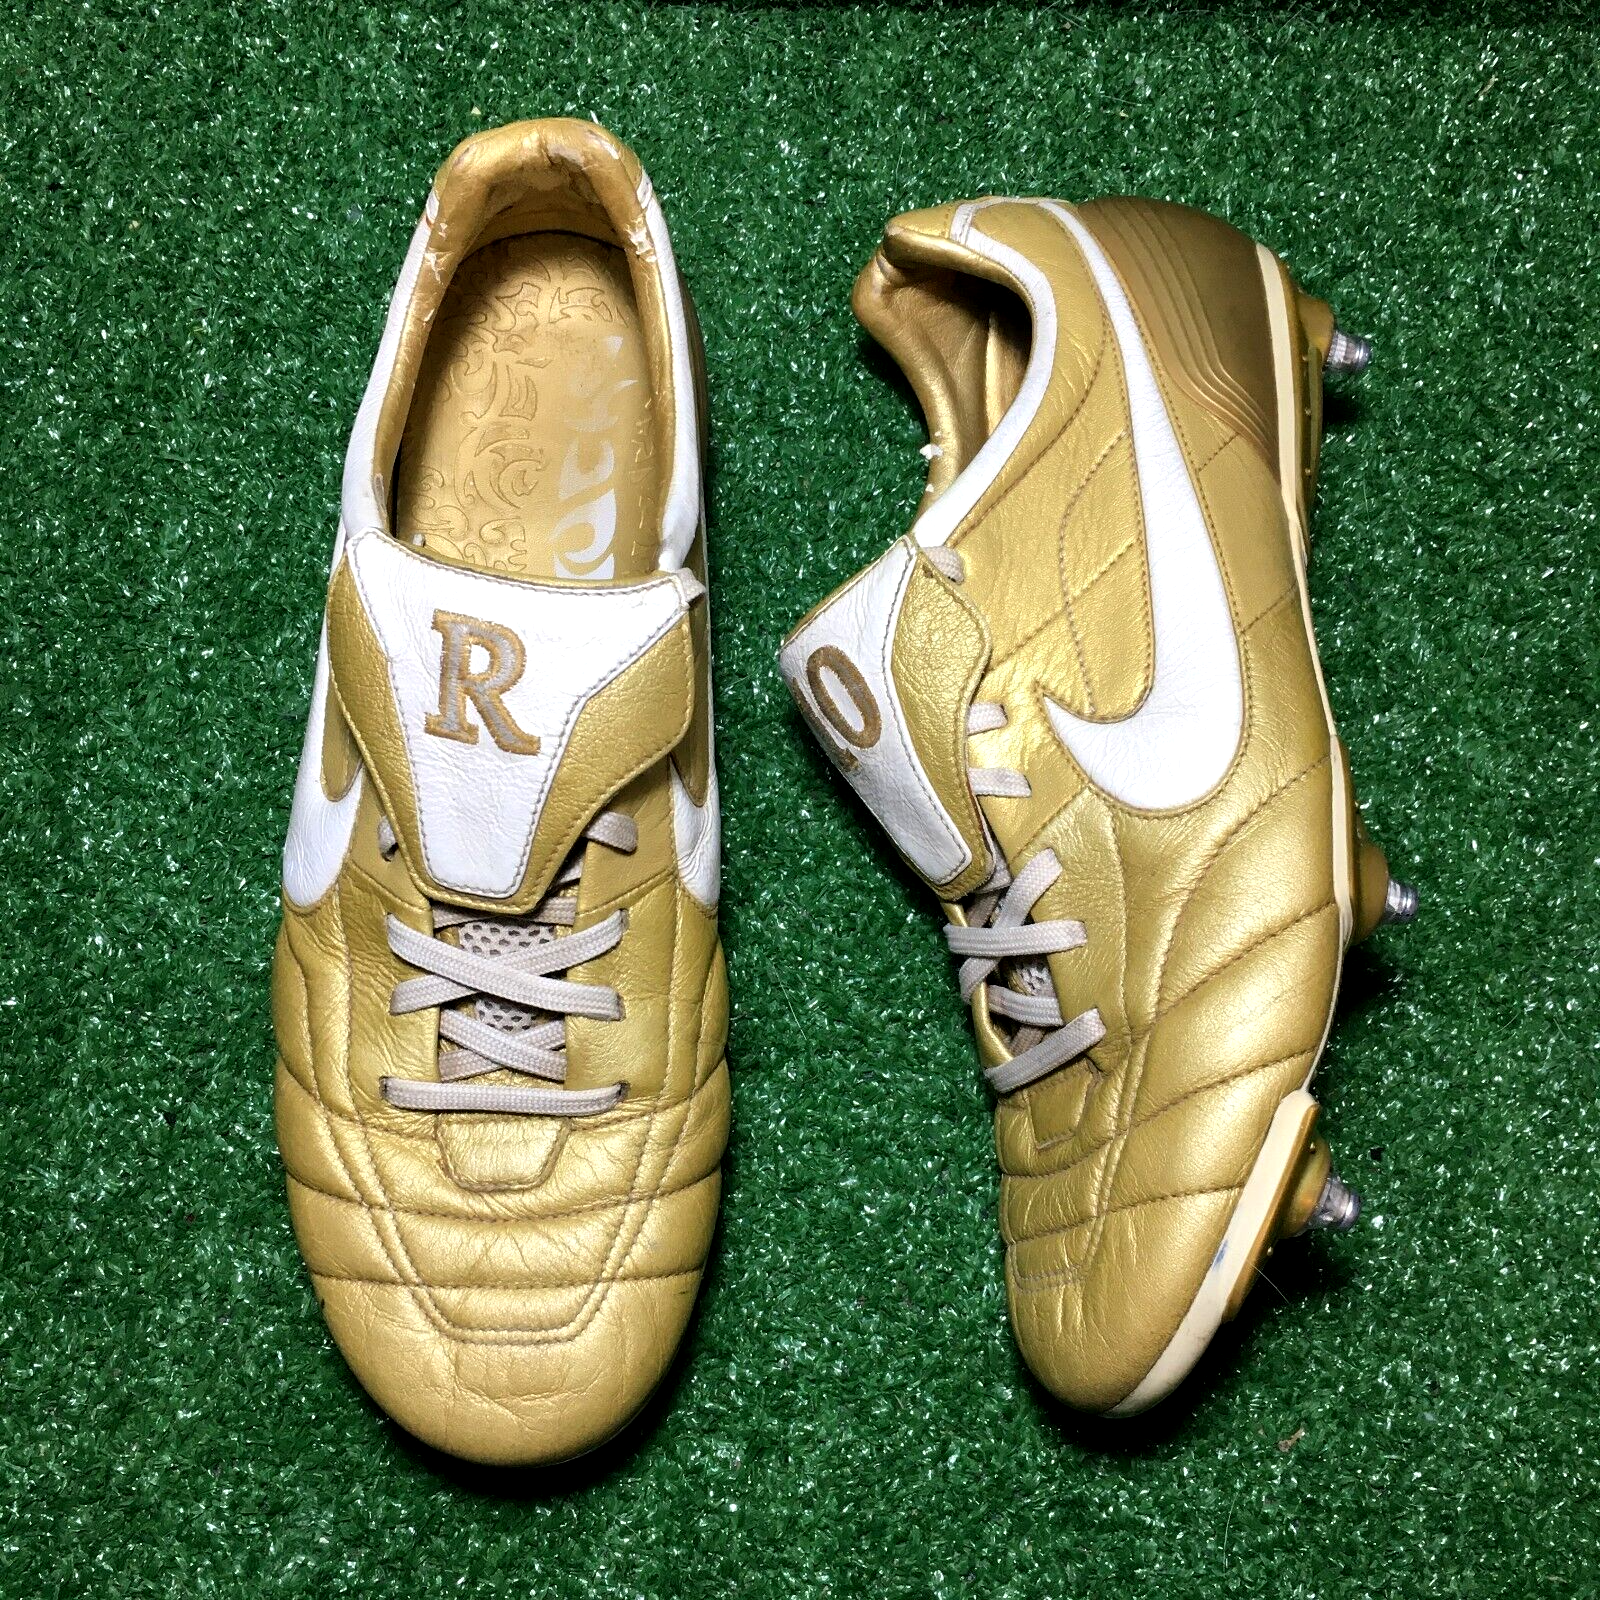 Discreet conjunctie hebzuchtig LIMITED AIR ZOOM Ronaldinho R10 Nike Tiempo Legend II Leather GOLD SG Elite  10 | eBay